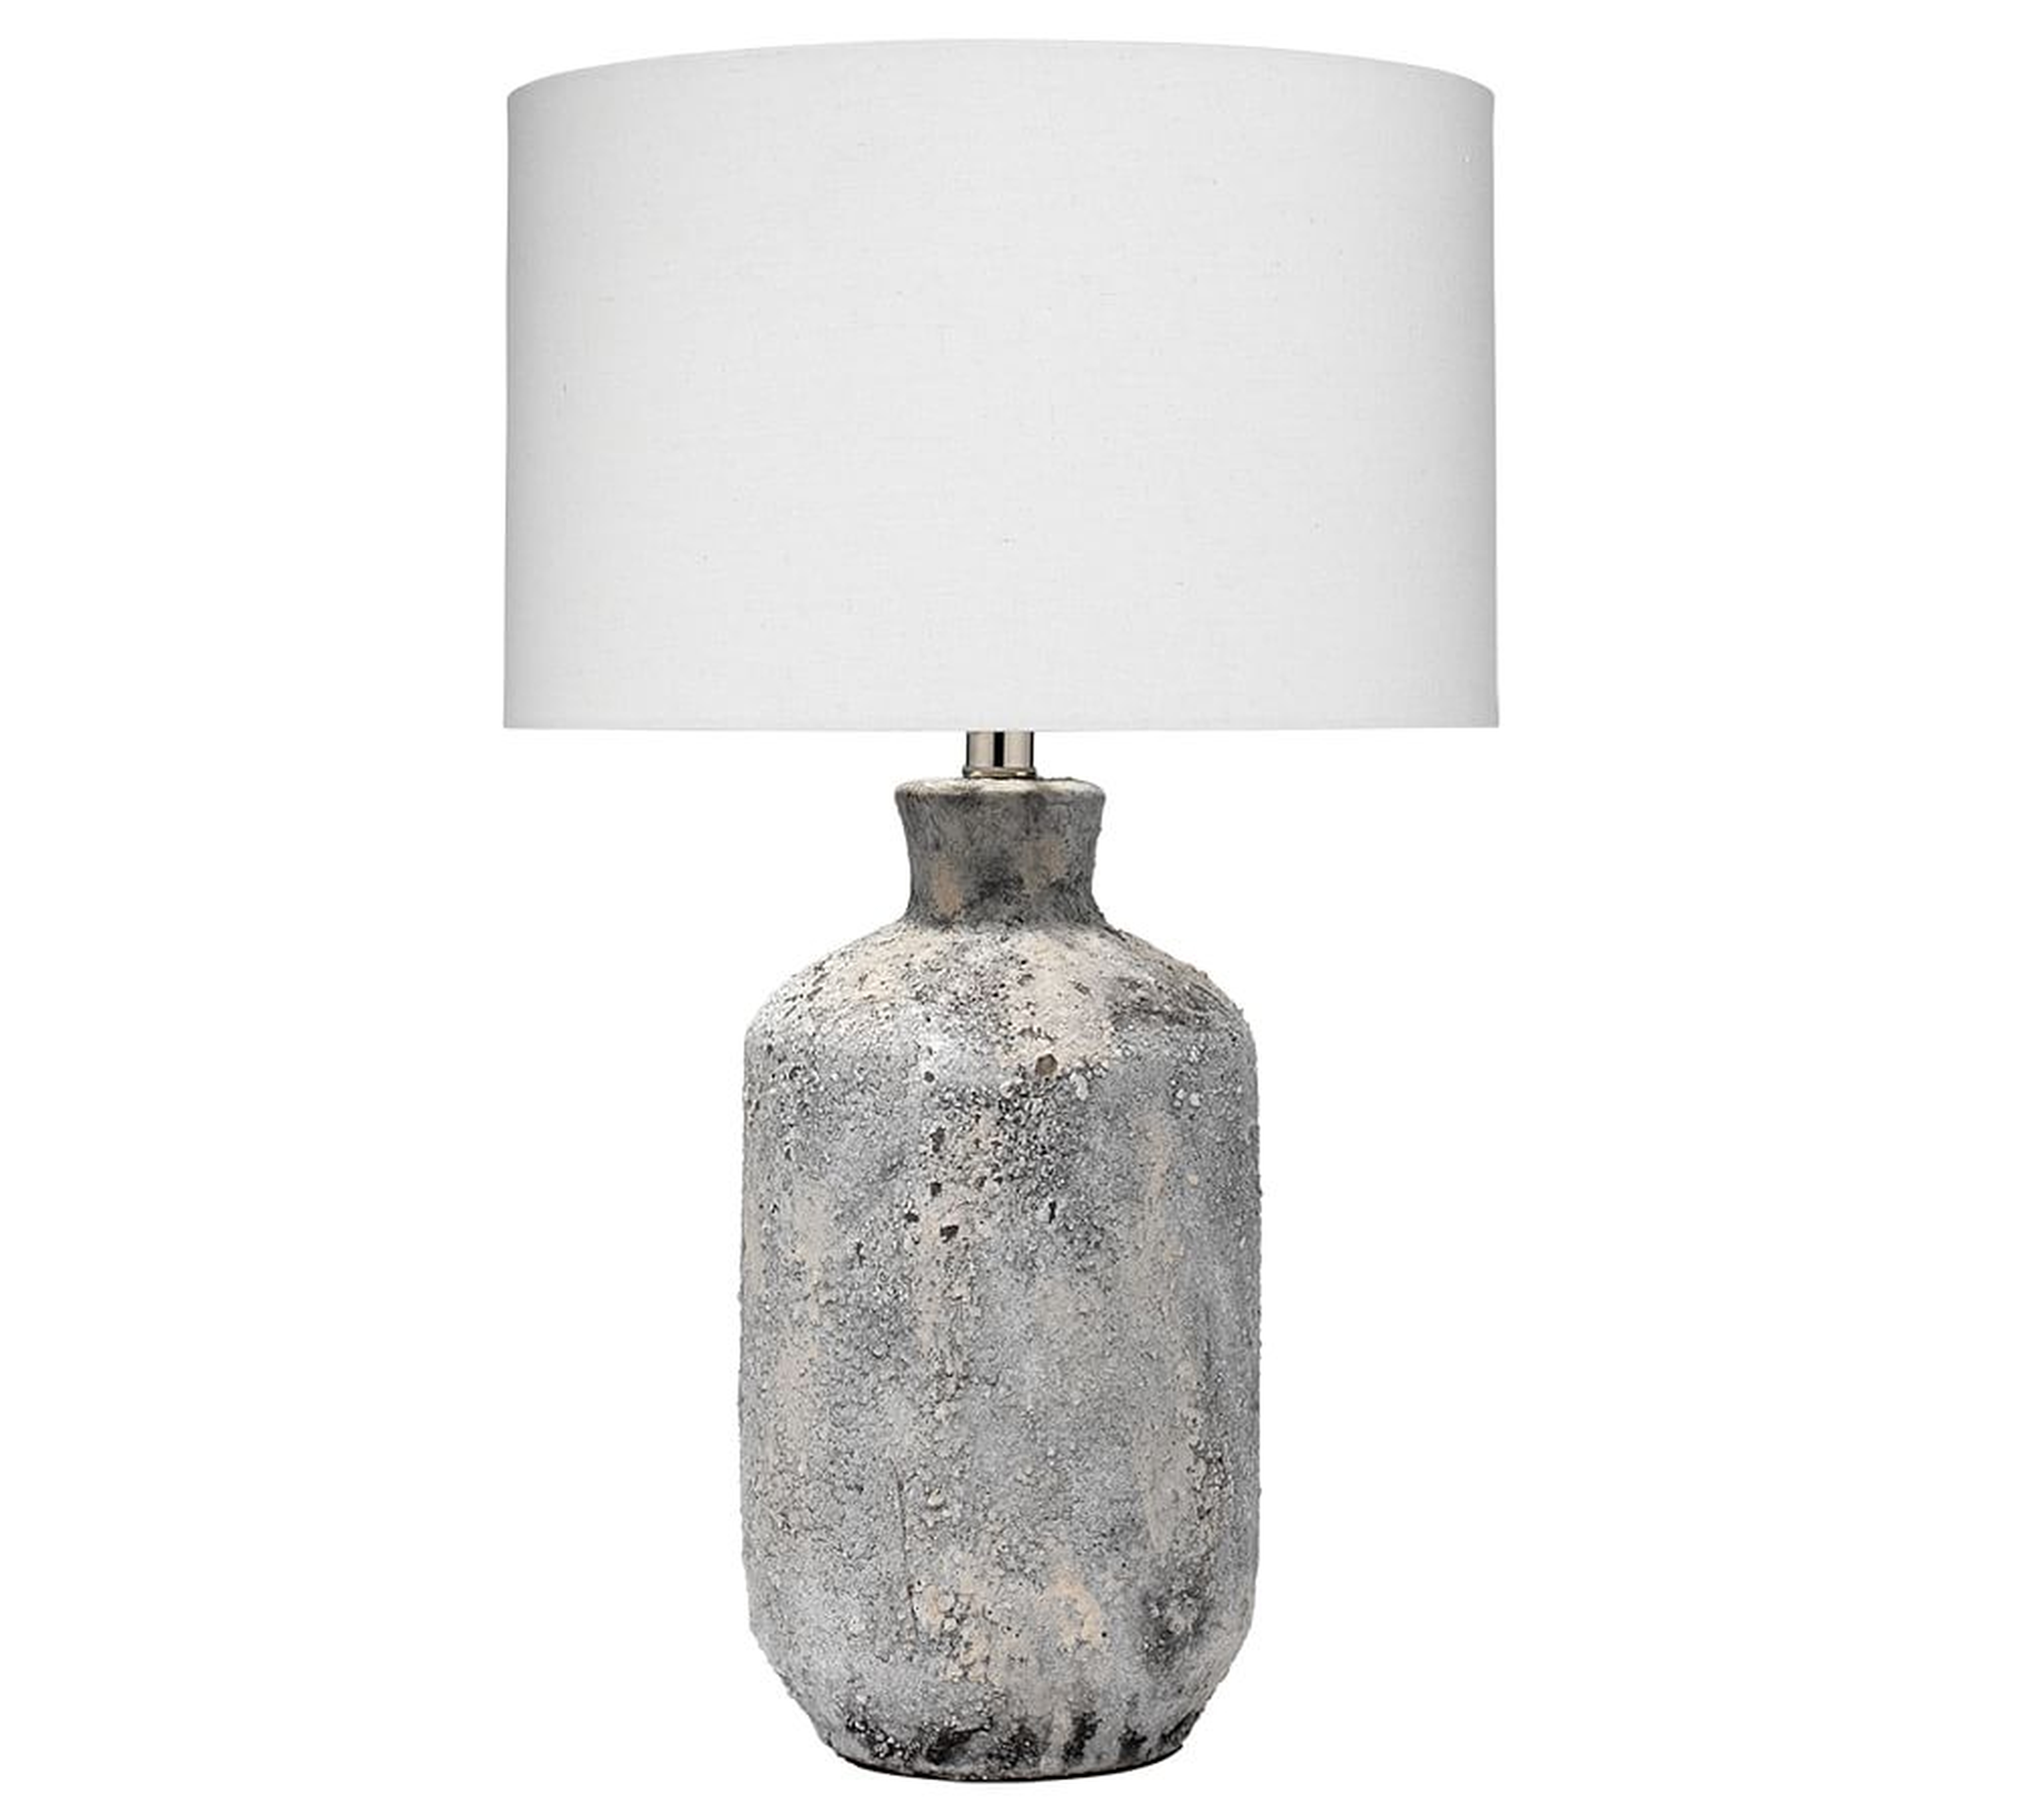 Barstow Ceramic Table Lamp, Grey Textured Ceramic, 24.5" - Pottery Barn